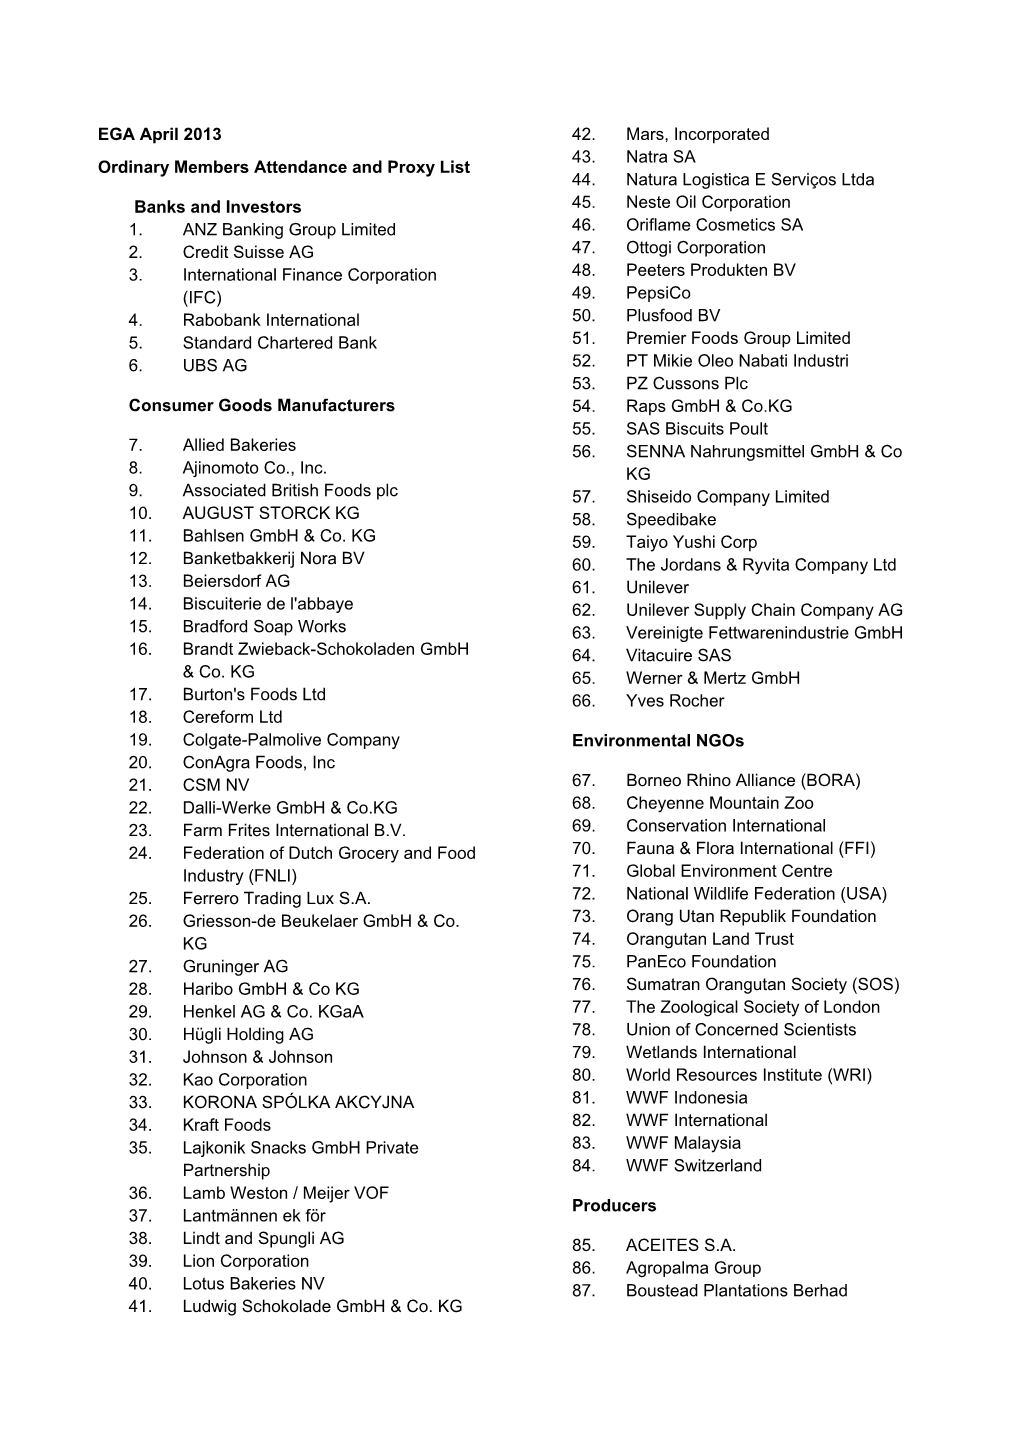 EGA April 2013 Ordinary Members Attendance and Proxy List Banks